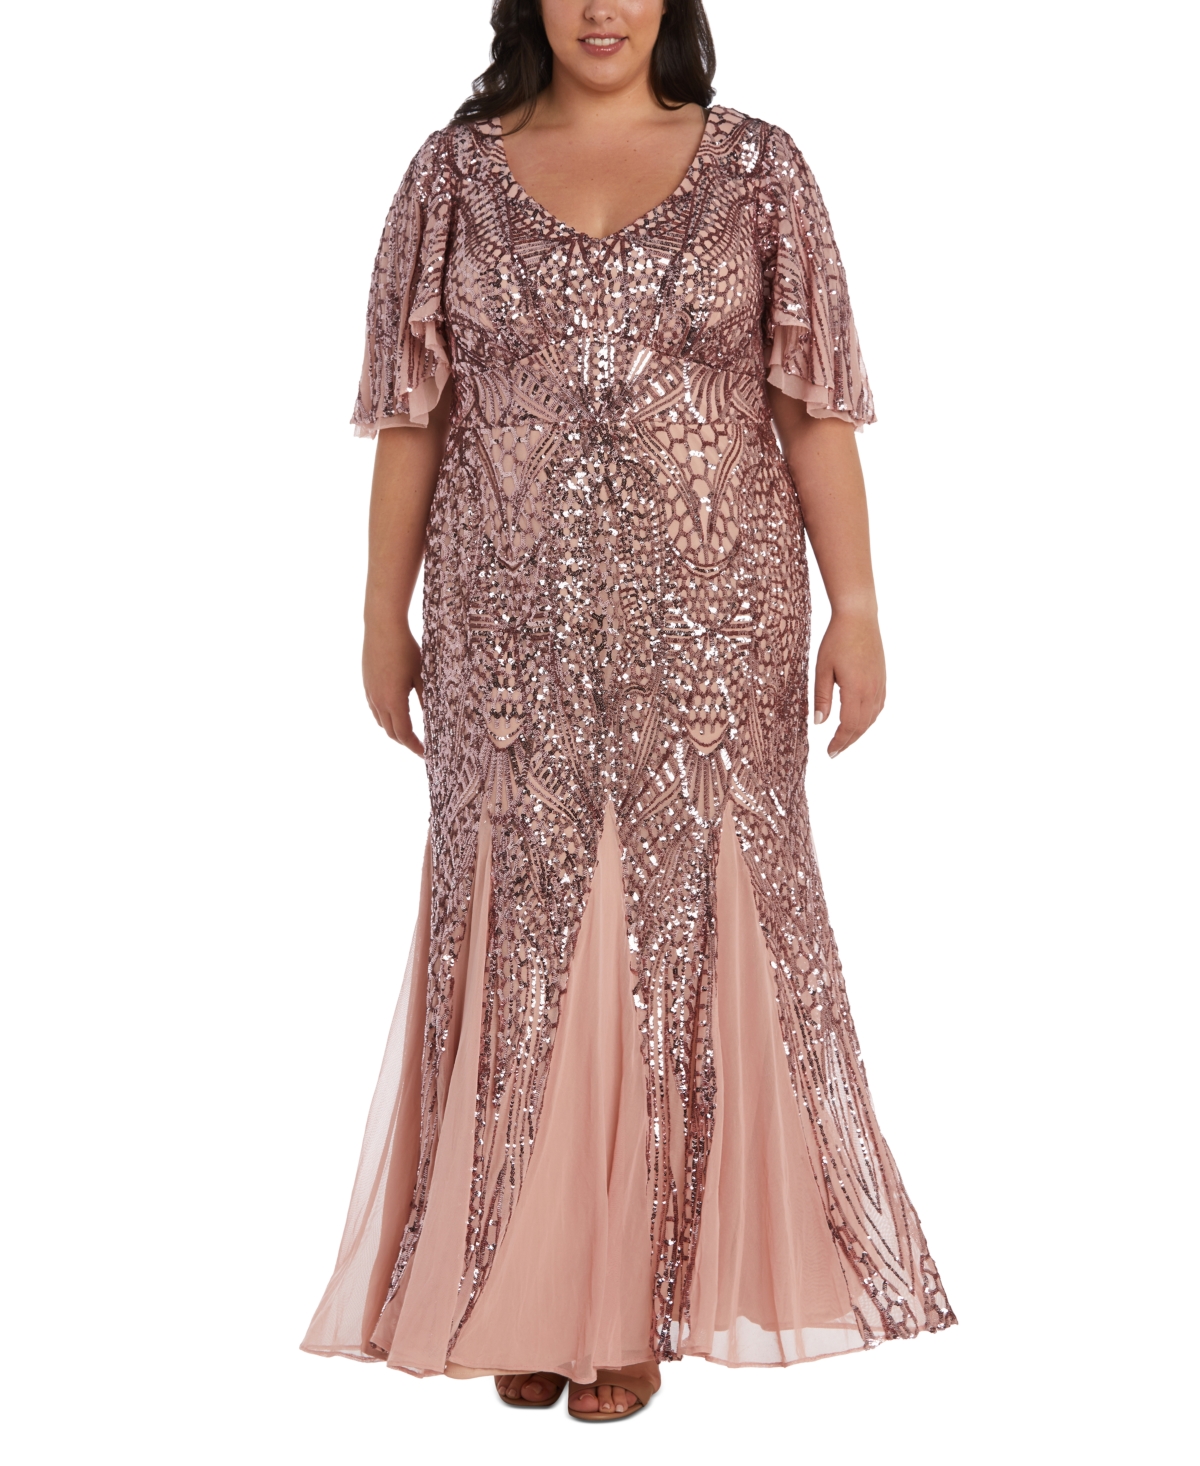 Downton Abbey Inspired Dresses Nightway Plus Size Sequin Flutter-Sleeve Godet Gown - Mauve $209.00 AT vintagedancer.com